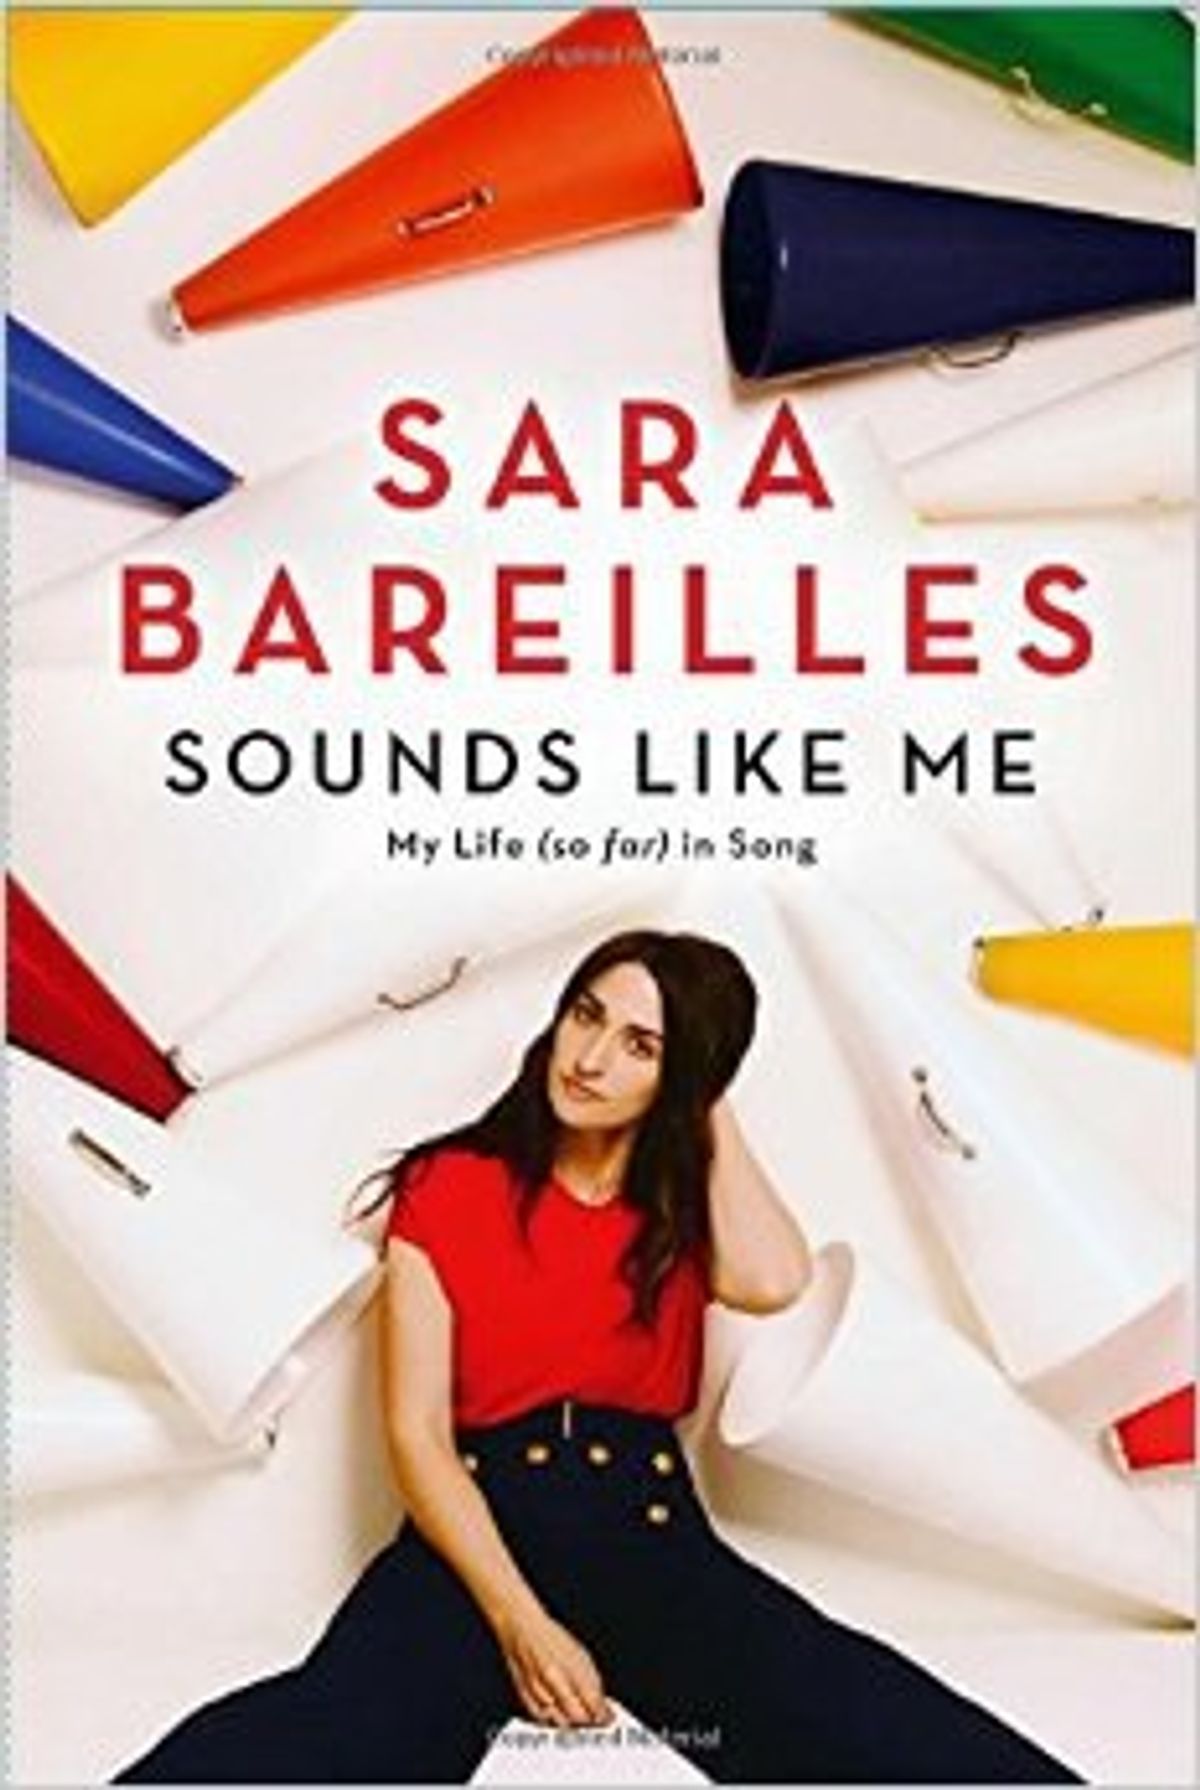 An Open Letter to Sara Bareilles